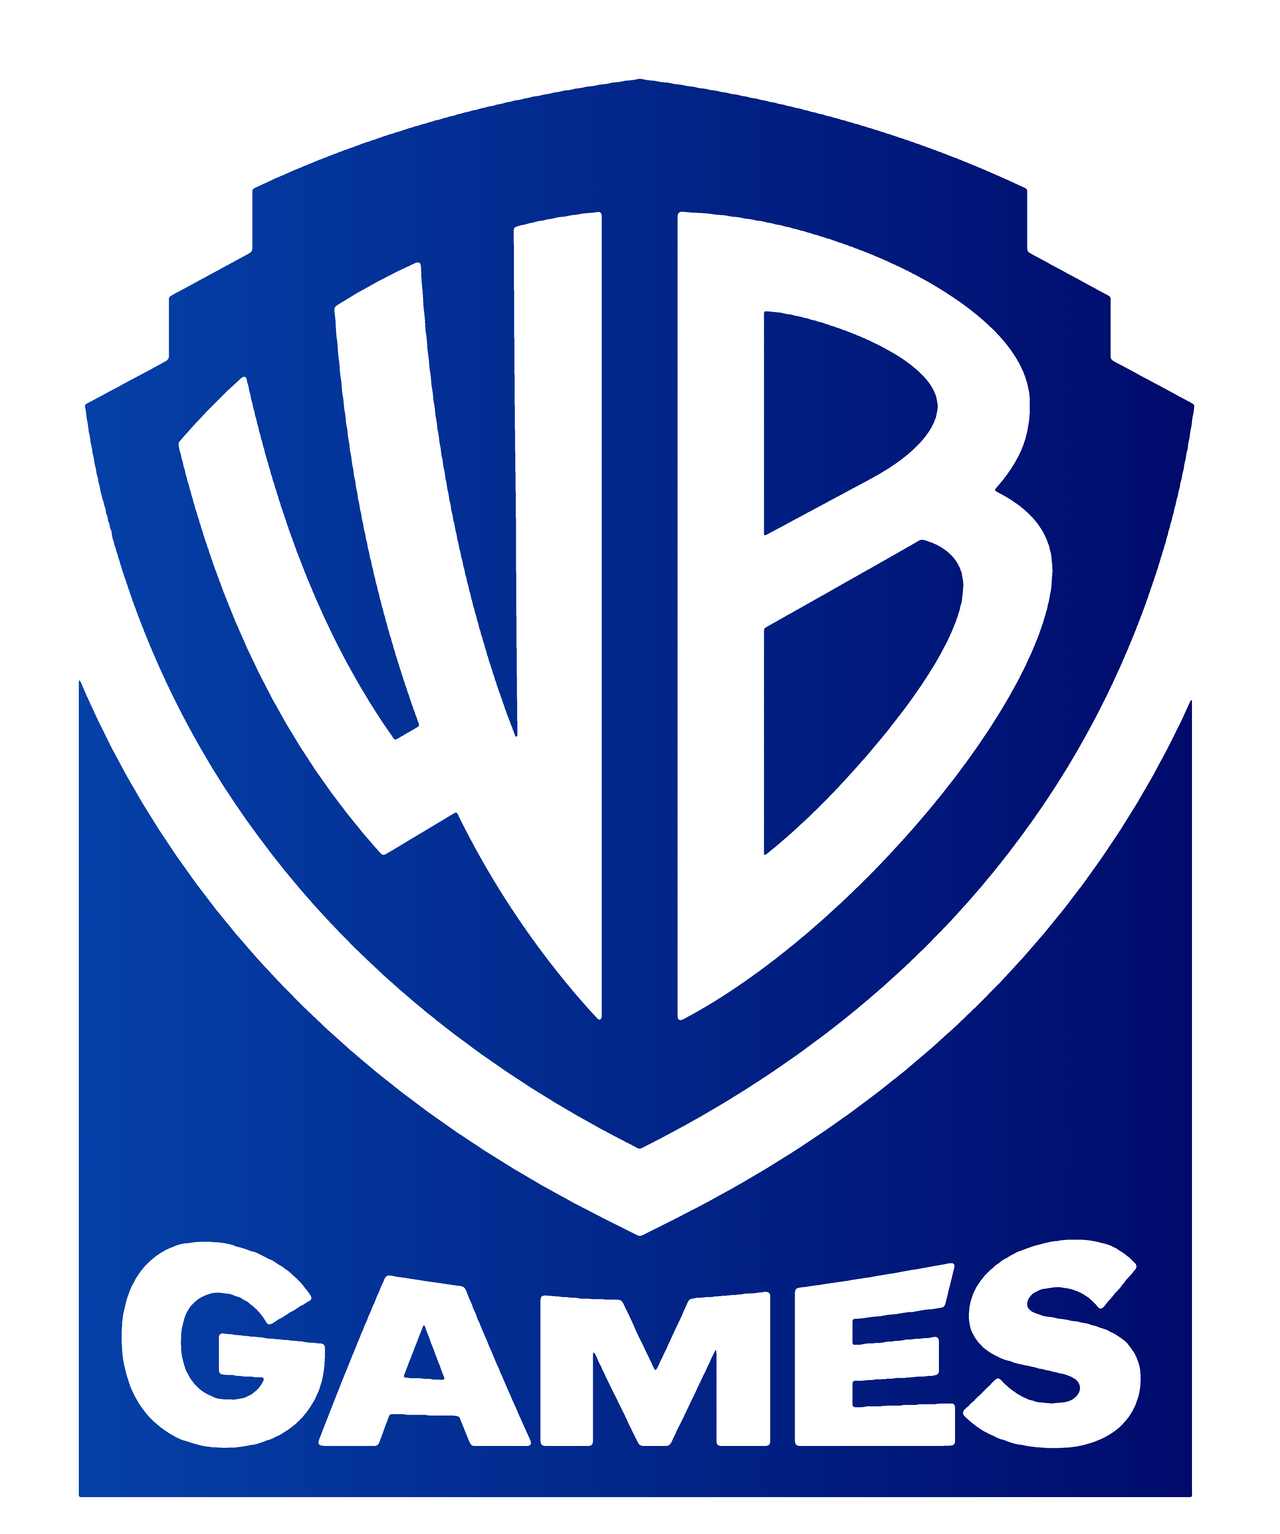 Warner Bros. Games logo by mygiahuy11 on DeviantArt